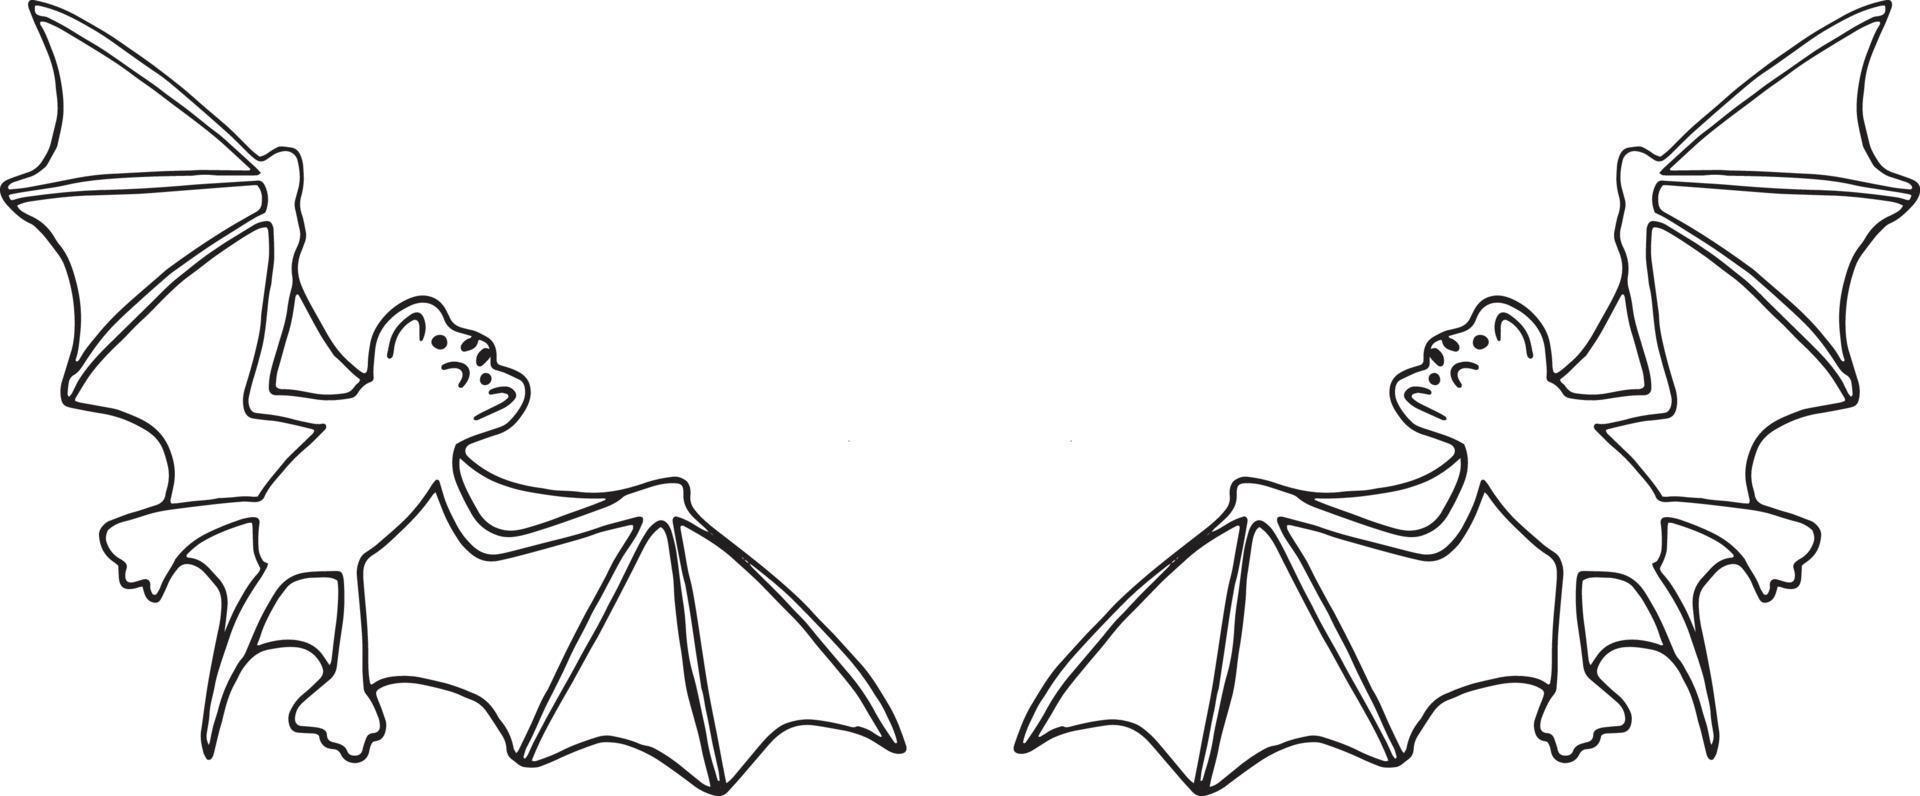 bat sketch frame, border hand drawn  doodle, minimalism, monochrome. template for design card, invitation. halloween, night animal flying vector